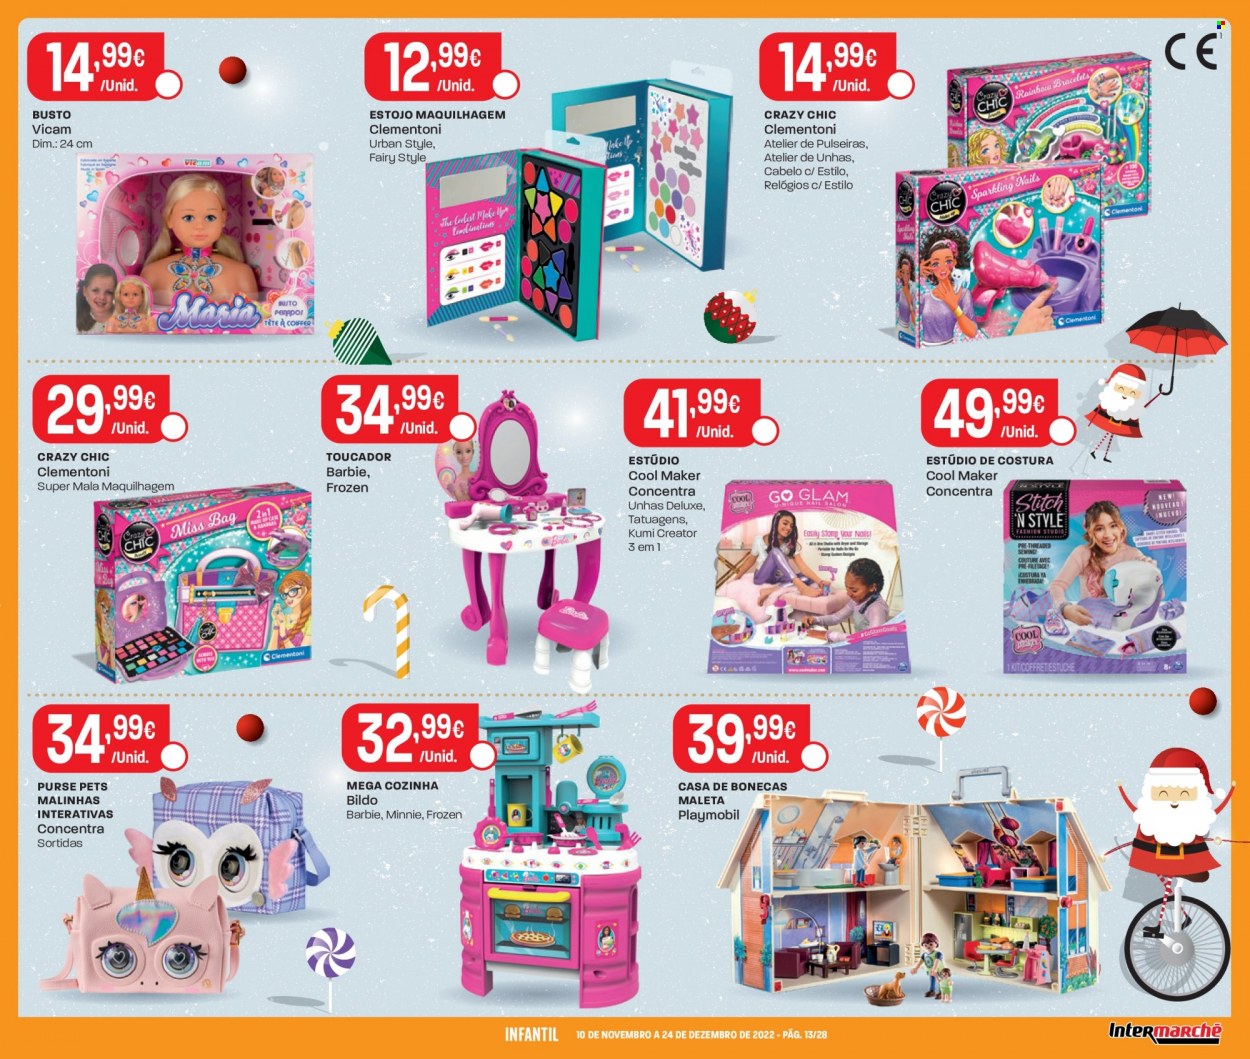 thumbnail - Folheto Intermarché - 10.11.2022 - 24.12.2022 - Produtos em promoção - Frozen, Fairy, Minnie, estojo, Barbie. Página 13.